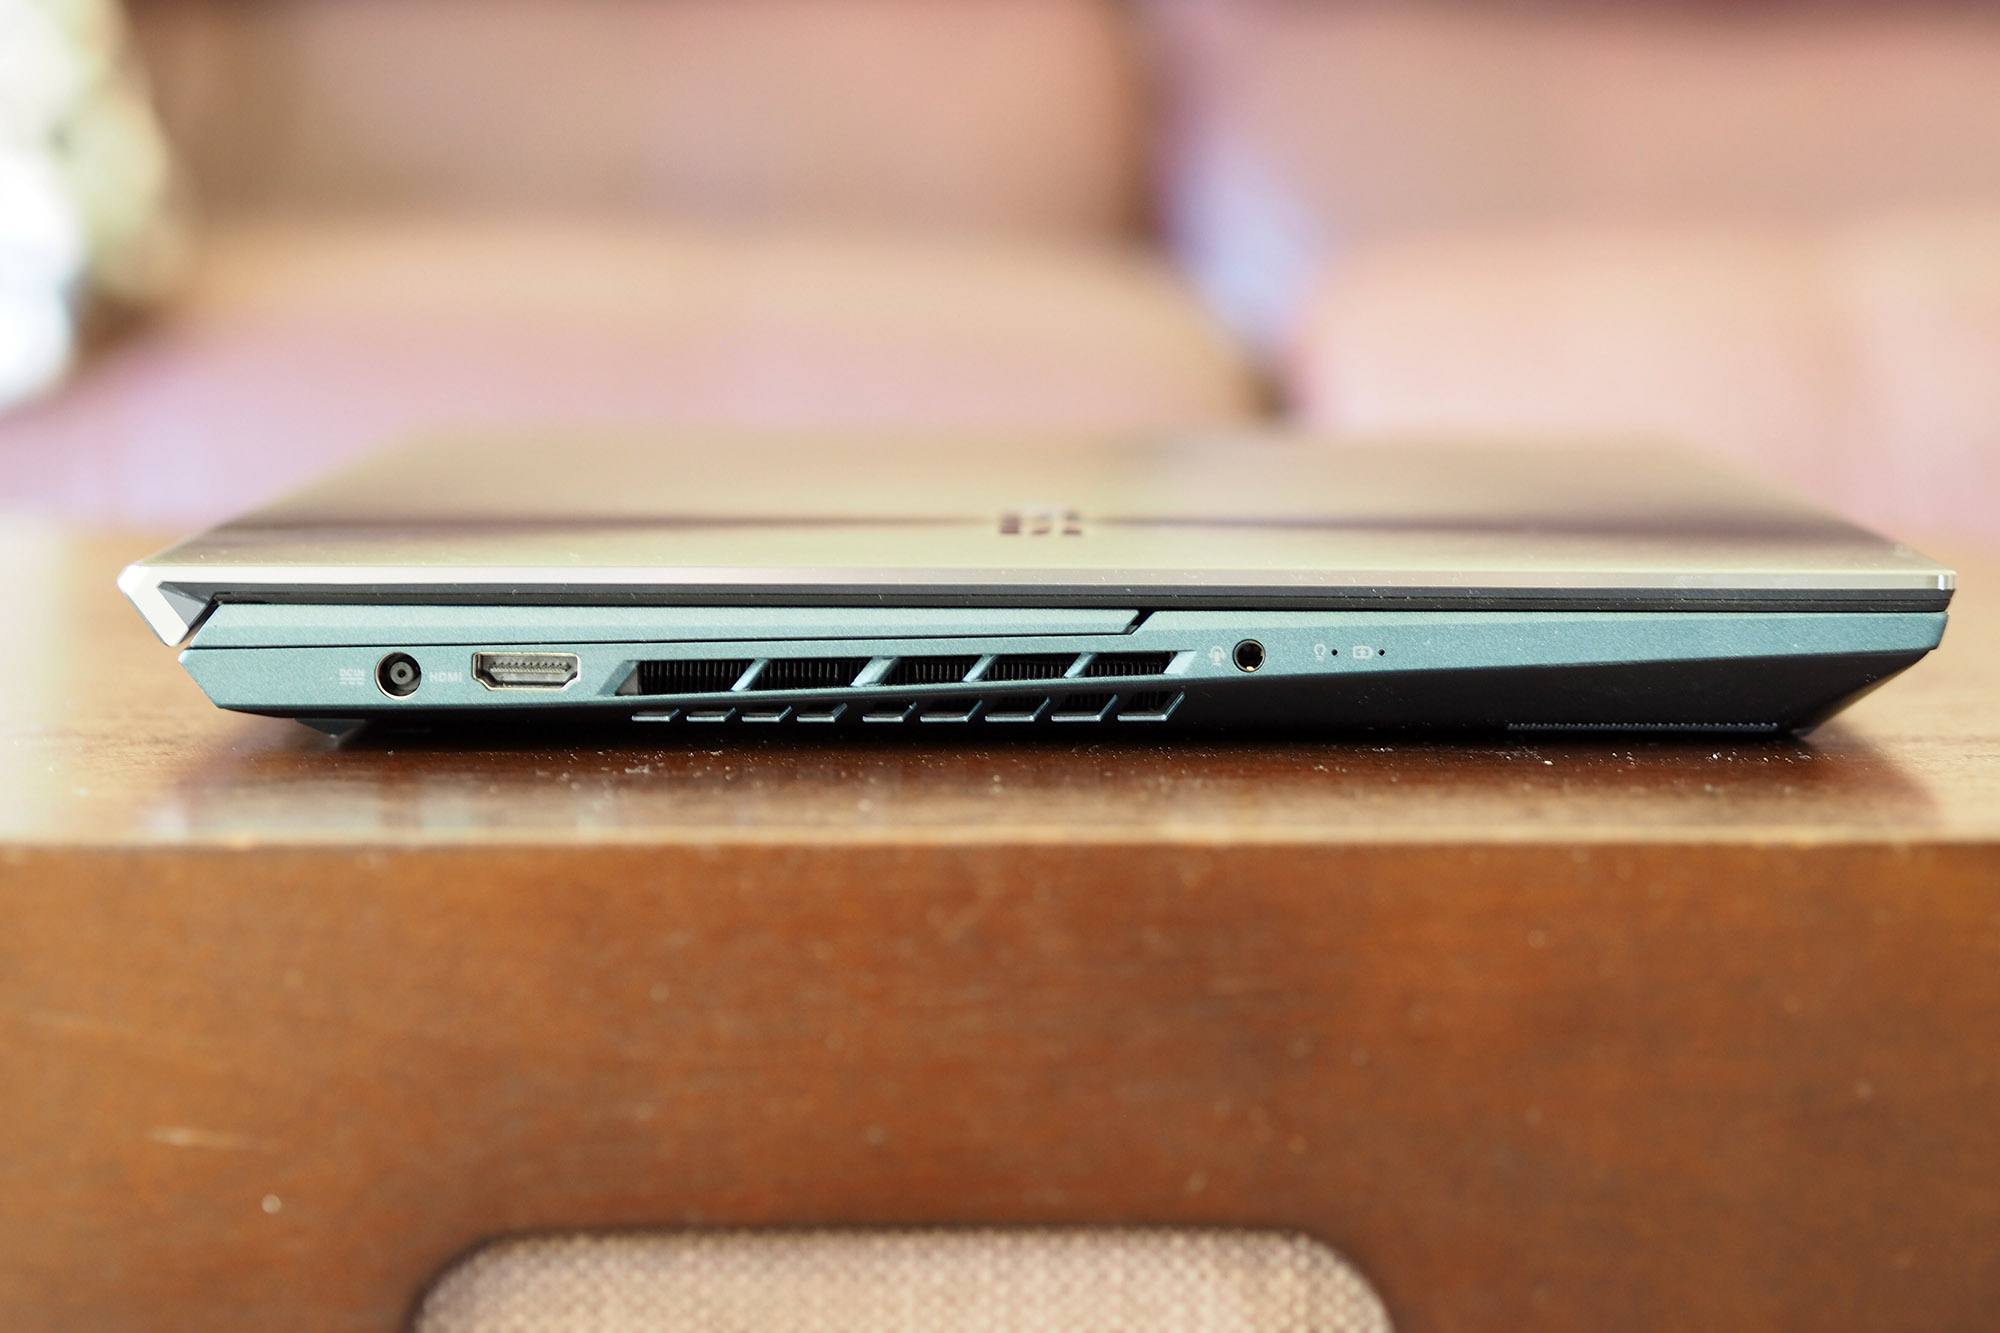 ASUS ZenBook Pro 15 UX535 hands-on: Half the price of a ZenBook Pro Duo 